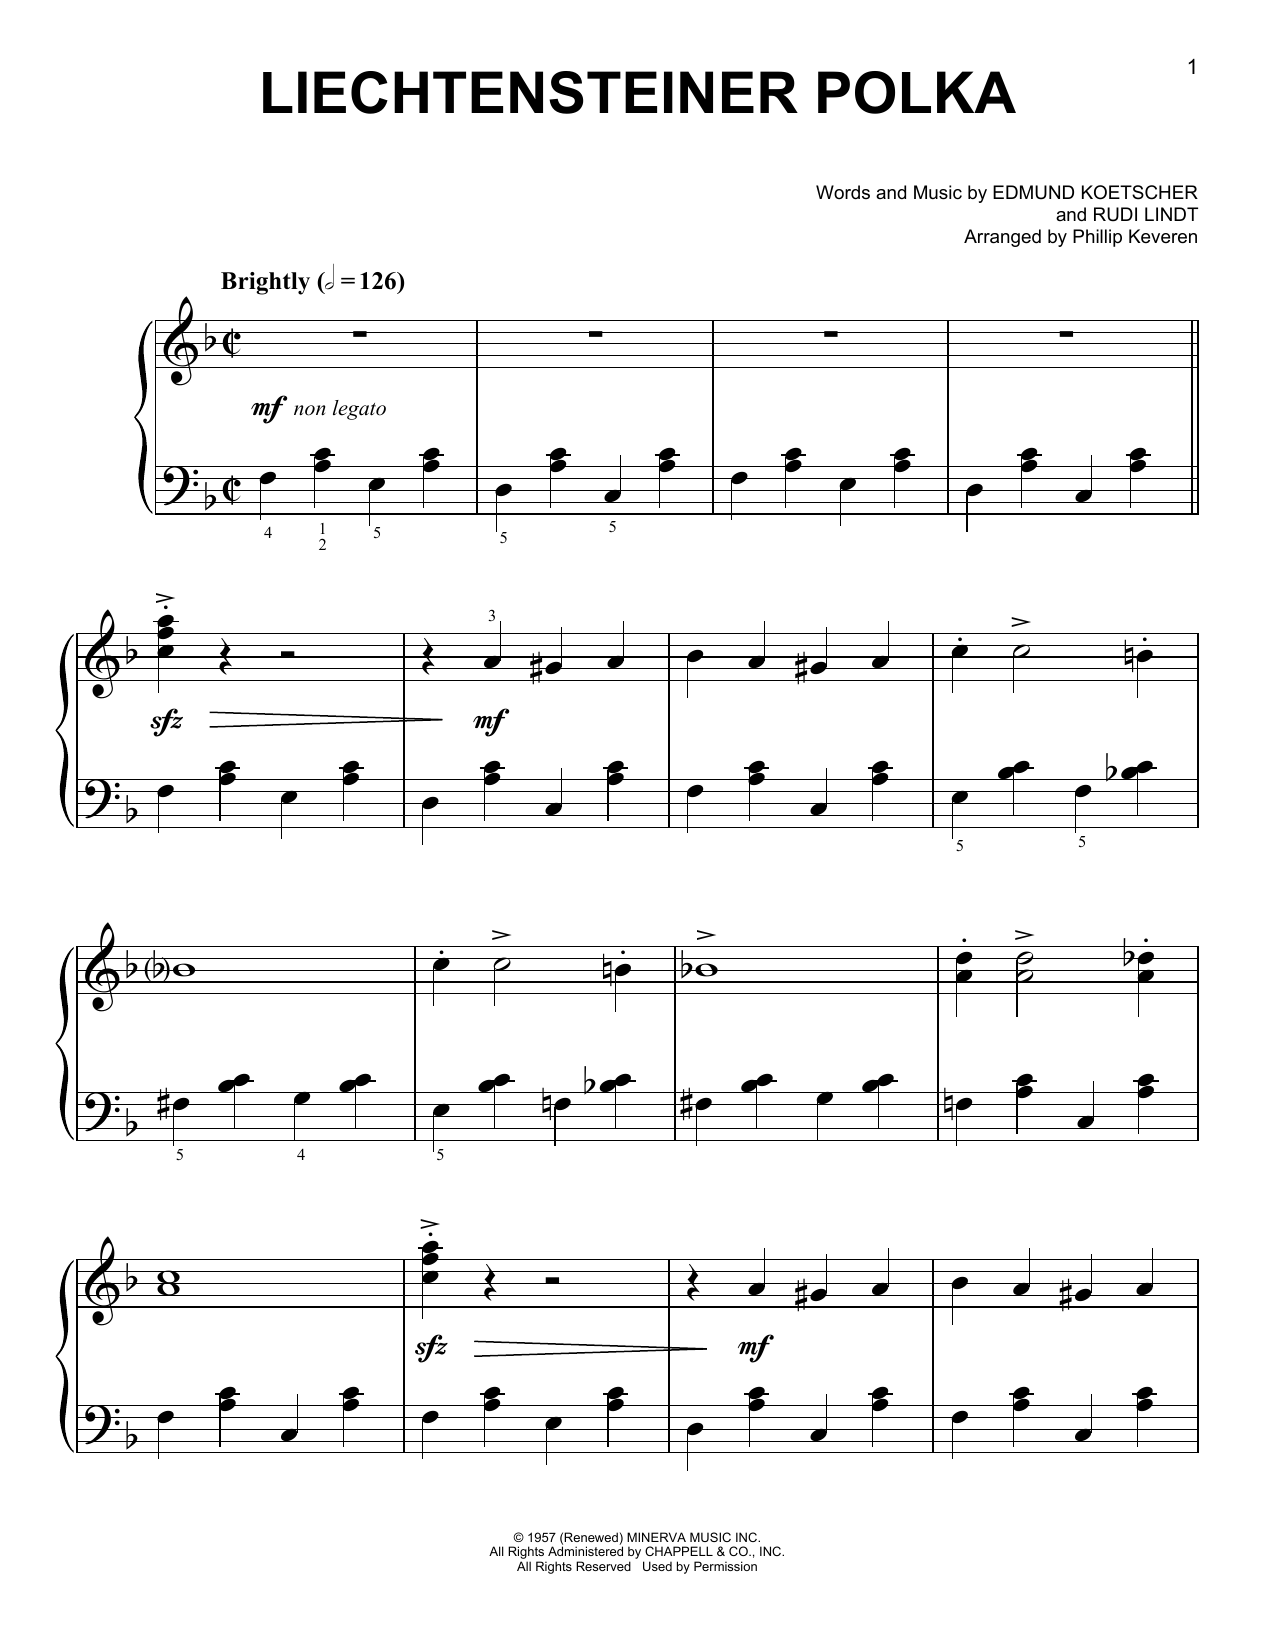 Download Edmund Koetscher Liechtensteiner Polka Sheet Music and learn how to play Easy Piano PDF digital score in minutes